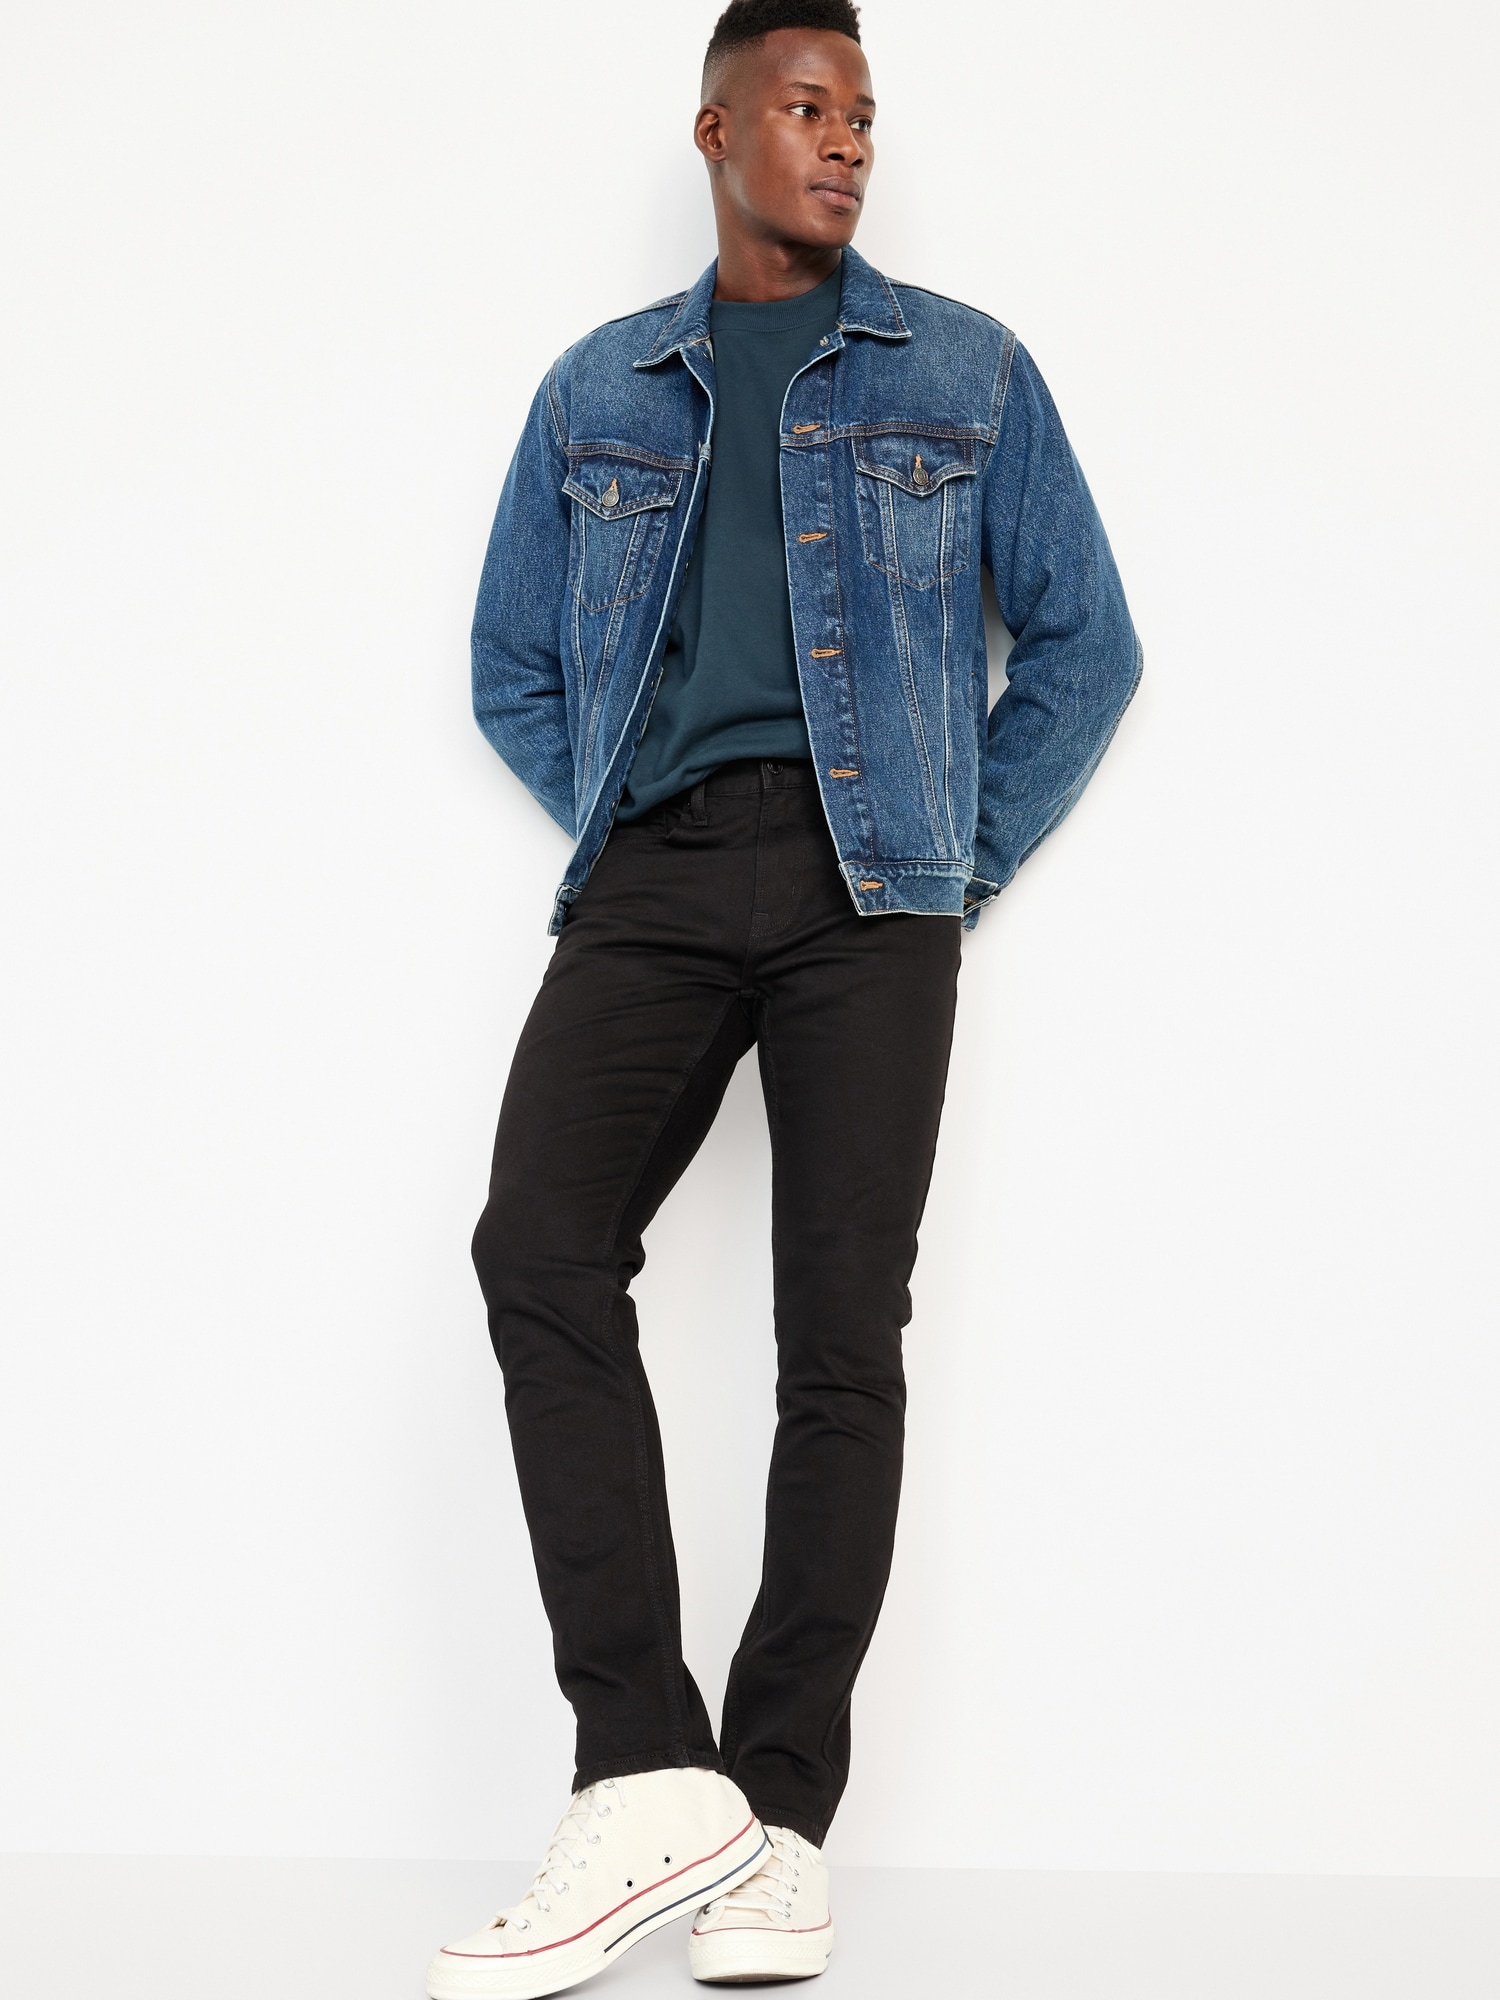 Blue Denim Jeans Outfit Ideas 2022 | Stylish Denim Jeans Outfits 2022 -  YouTube | Mens fashion suits, Men fashion casual outfits, Fashion suits for  men